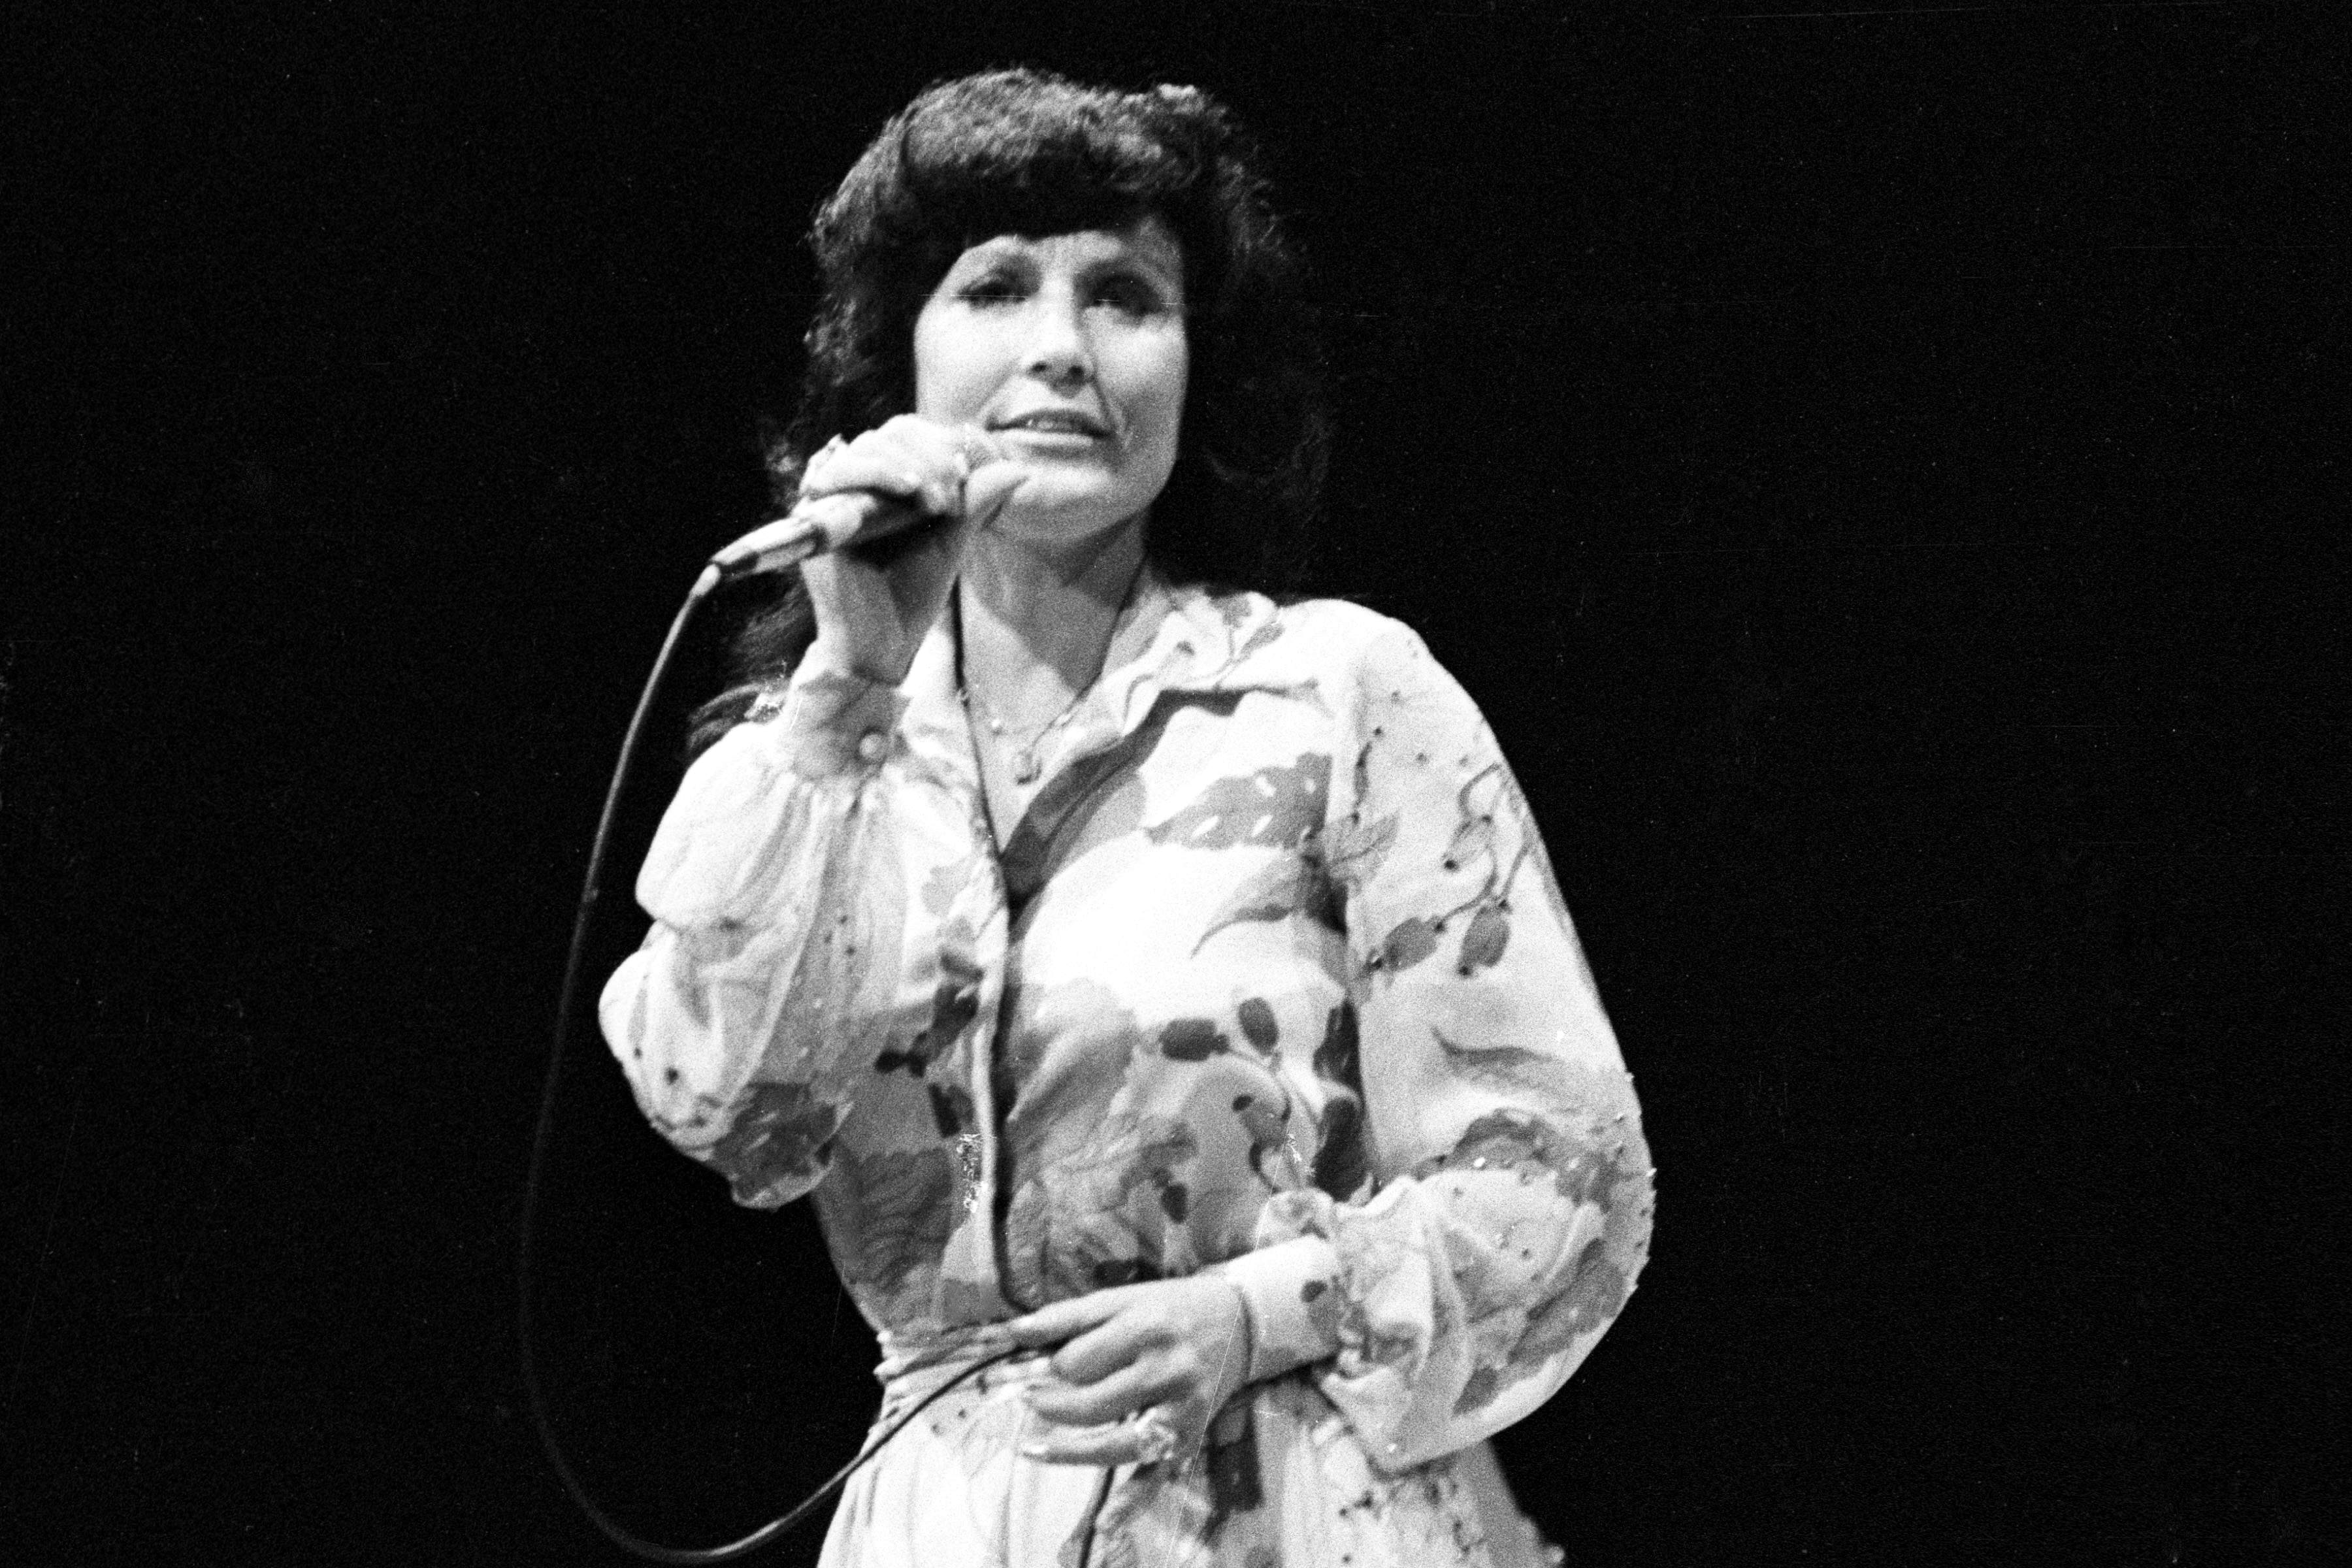 A black-and-white photo of Loretta Lynn holding a microphone